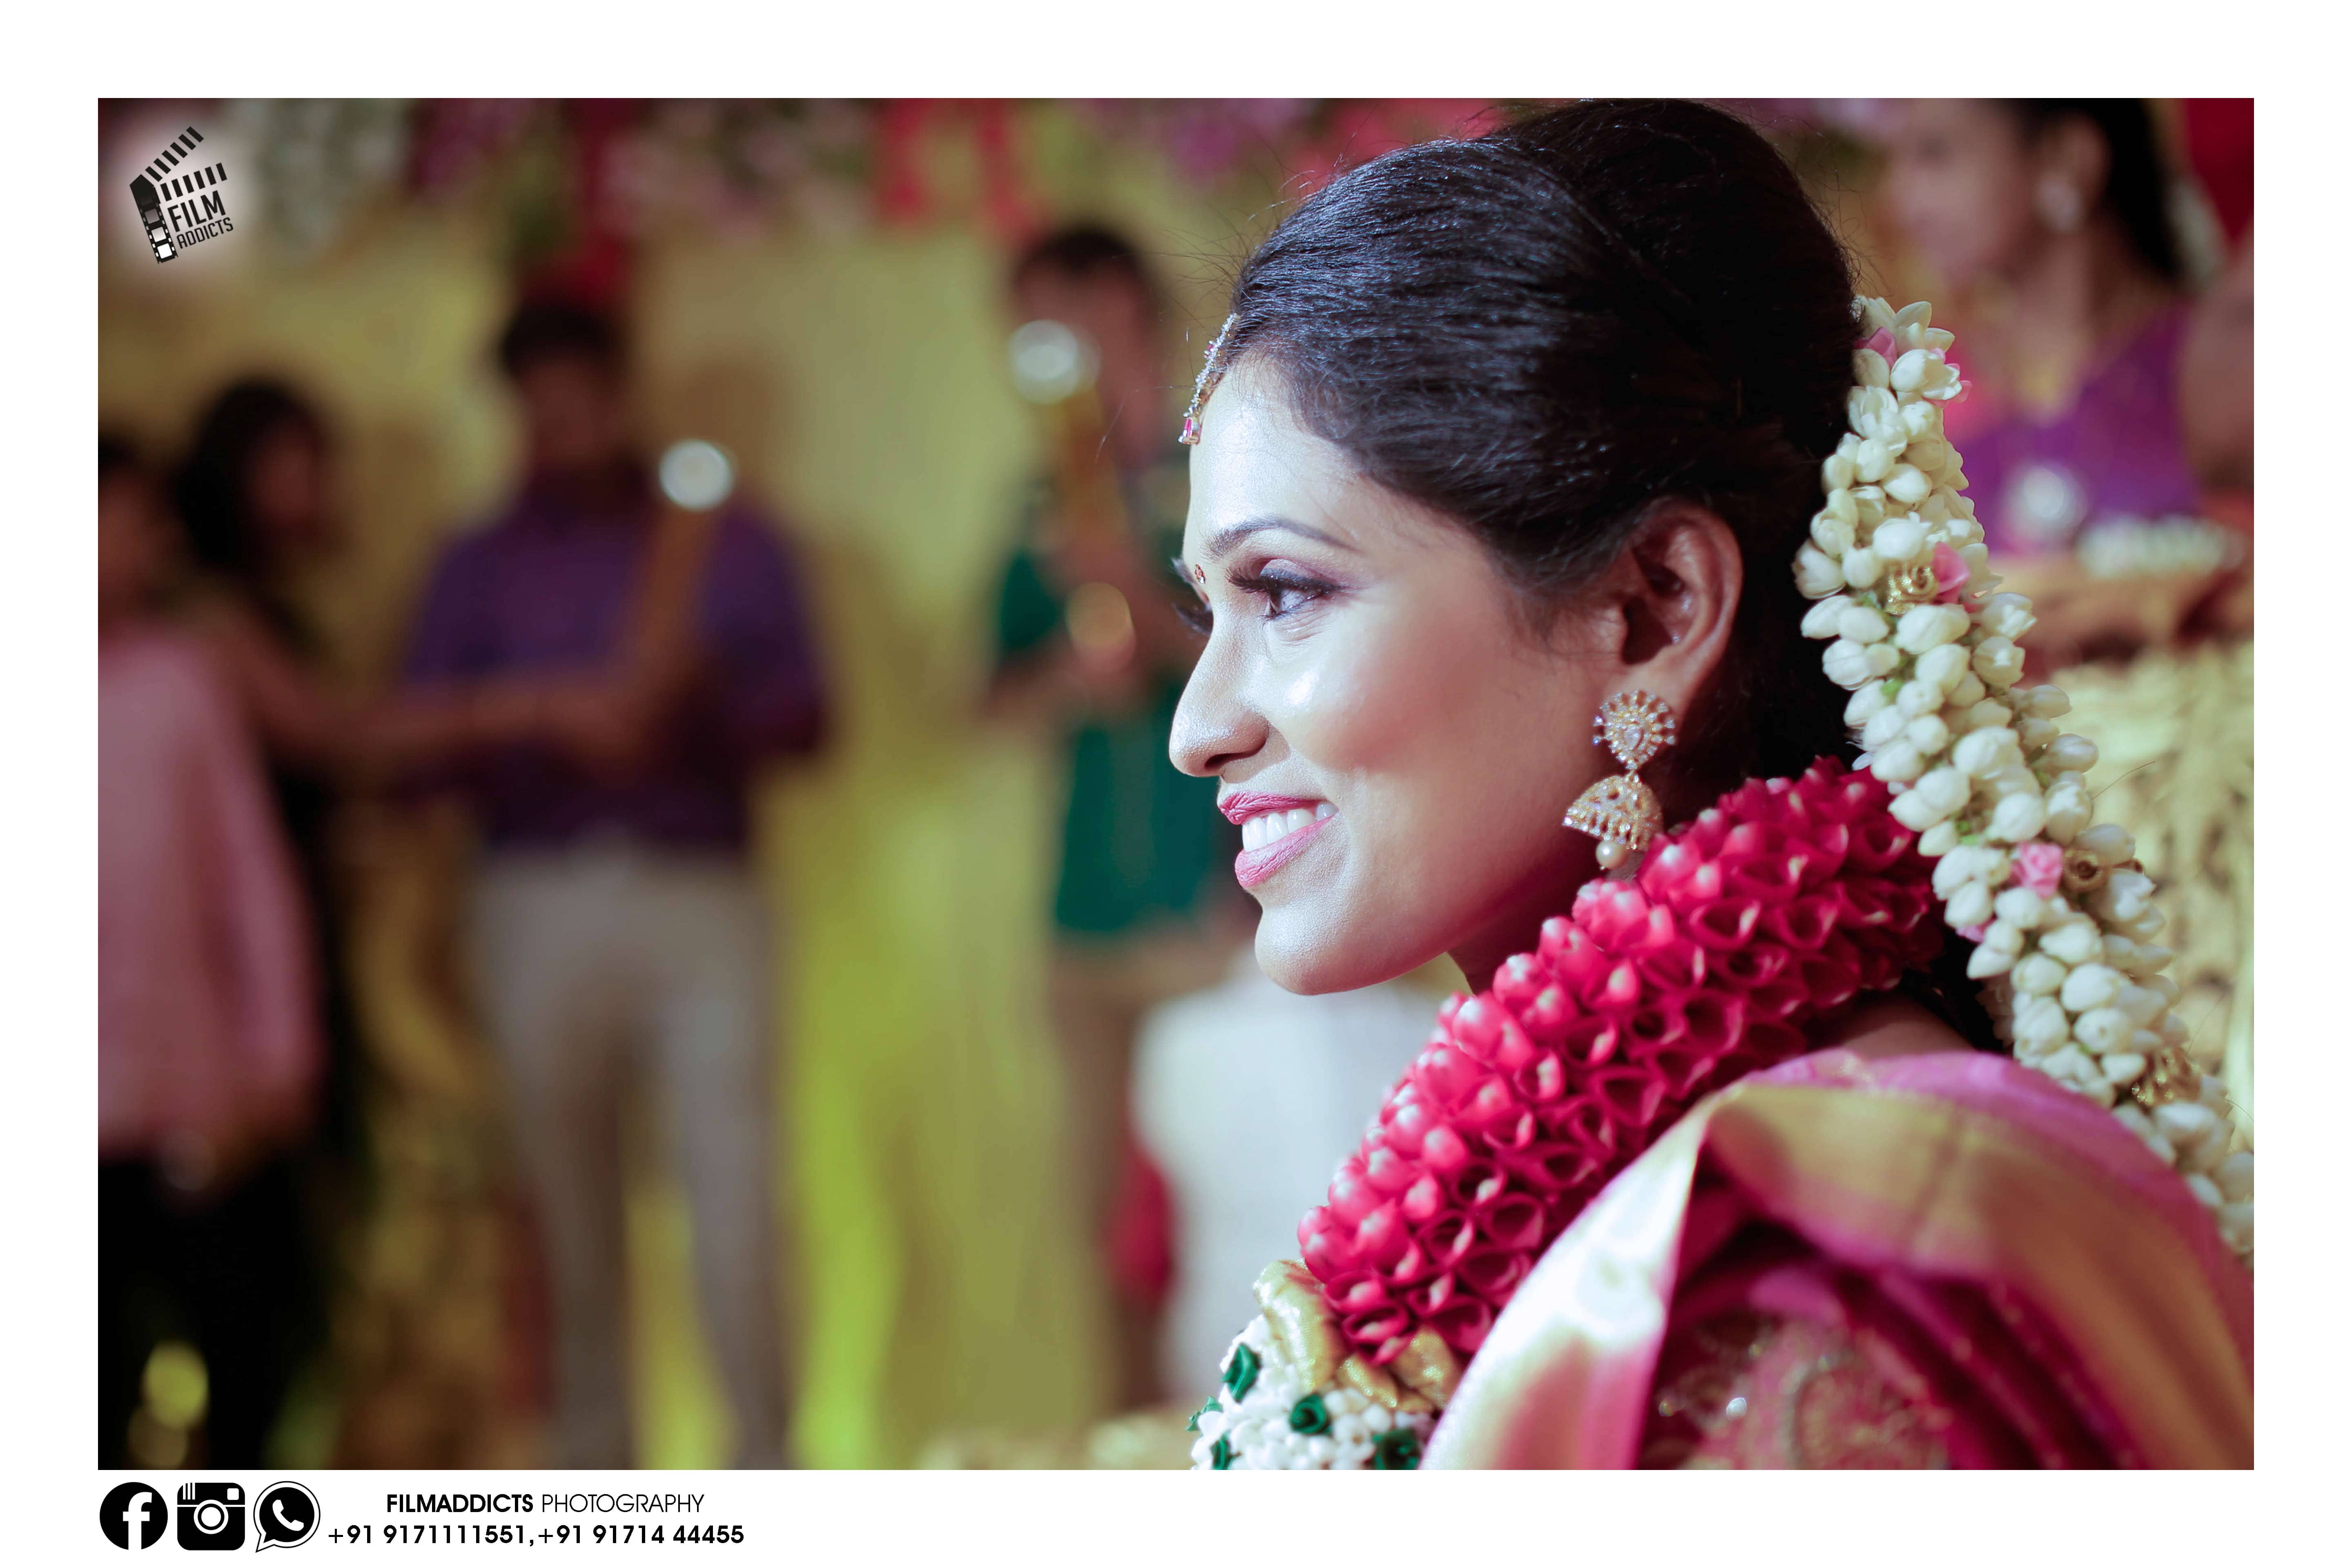 best-wedding-photographers-in-theni best-weding-photographers-in-theni candid-wedding-photographer-in-theni asian-wedding-photography-in-theni best-wedding-photographers-in-thenis-in-theni best-photographers-in-theni best-photography-theni brahmin-wedding-photographers-in-theni brahmin-wedding-photography-in-theni candid-photographers-theni candid-photography-in-theni christian-wedding-photographer-in-theni christian-wedding-photography-in-theni cine-style-wedding-videography-in-theni destination-wedding-photographer-in-theni marriage-photography-in-theni muslim-photographer-in-theni muslim-wedding-photography-in-theni no-1-candid-photographers-in-theni no-1-wedding-photographers-in-theni photographer-for-wedding-in-theni professional-wedding-photographers-in-theni tamil-marriage-in-theni theni-wedding-photographers top-10-photographers-in-theni top-wedding-filmmakers-in-theni top-wedding-videographers-in-theni video-gallery-in-theni videographers-in-theni videography-in-theni wedding-cinema-in-theni wedding-cinematography-in-theni wedding-event-management-in-theni wedding-filmer-in-theni wedding-filmer-in-theni-india wedding-films-in-theni wedding-highlights-videos-in-theni wedding-photographer-in-theni wedding-photographer-theni wedding-photographers-in-theni wedding-photographers-theni wedding-photography-in-theni wedding-photography-theni wedding-short-films-in-theni wedding-story-telling-in-theni wedding-storytellers-in-theni wedding-video-in-theni wedding-videographers-in-theni wedding-videos-in-theni weddings-in-cinema-style-in-theni